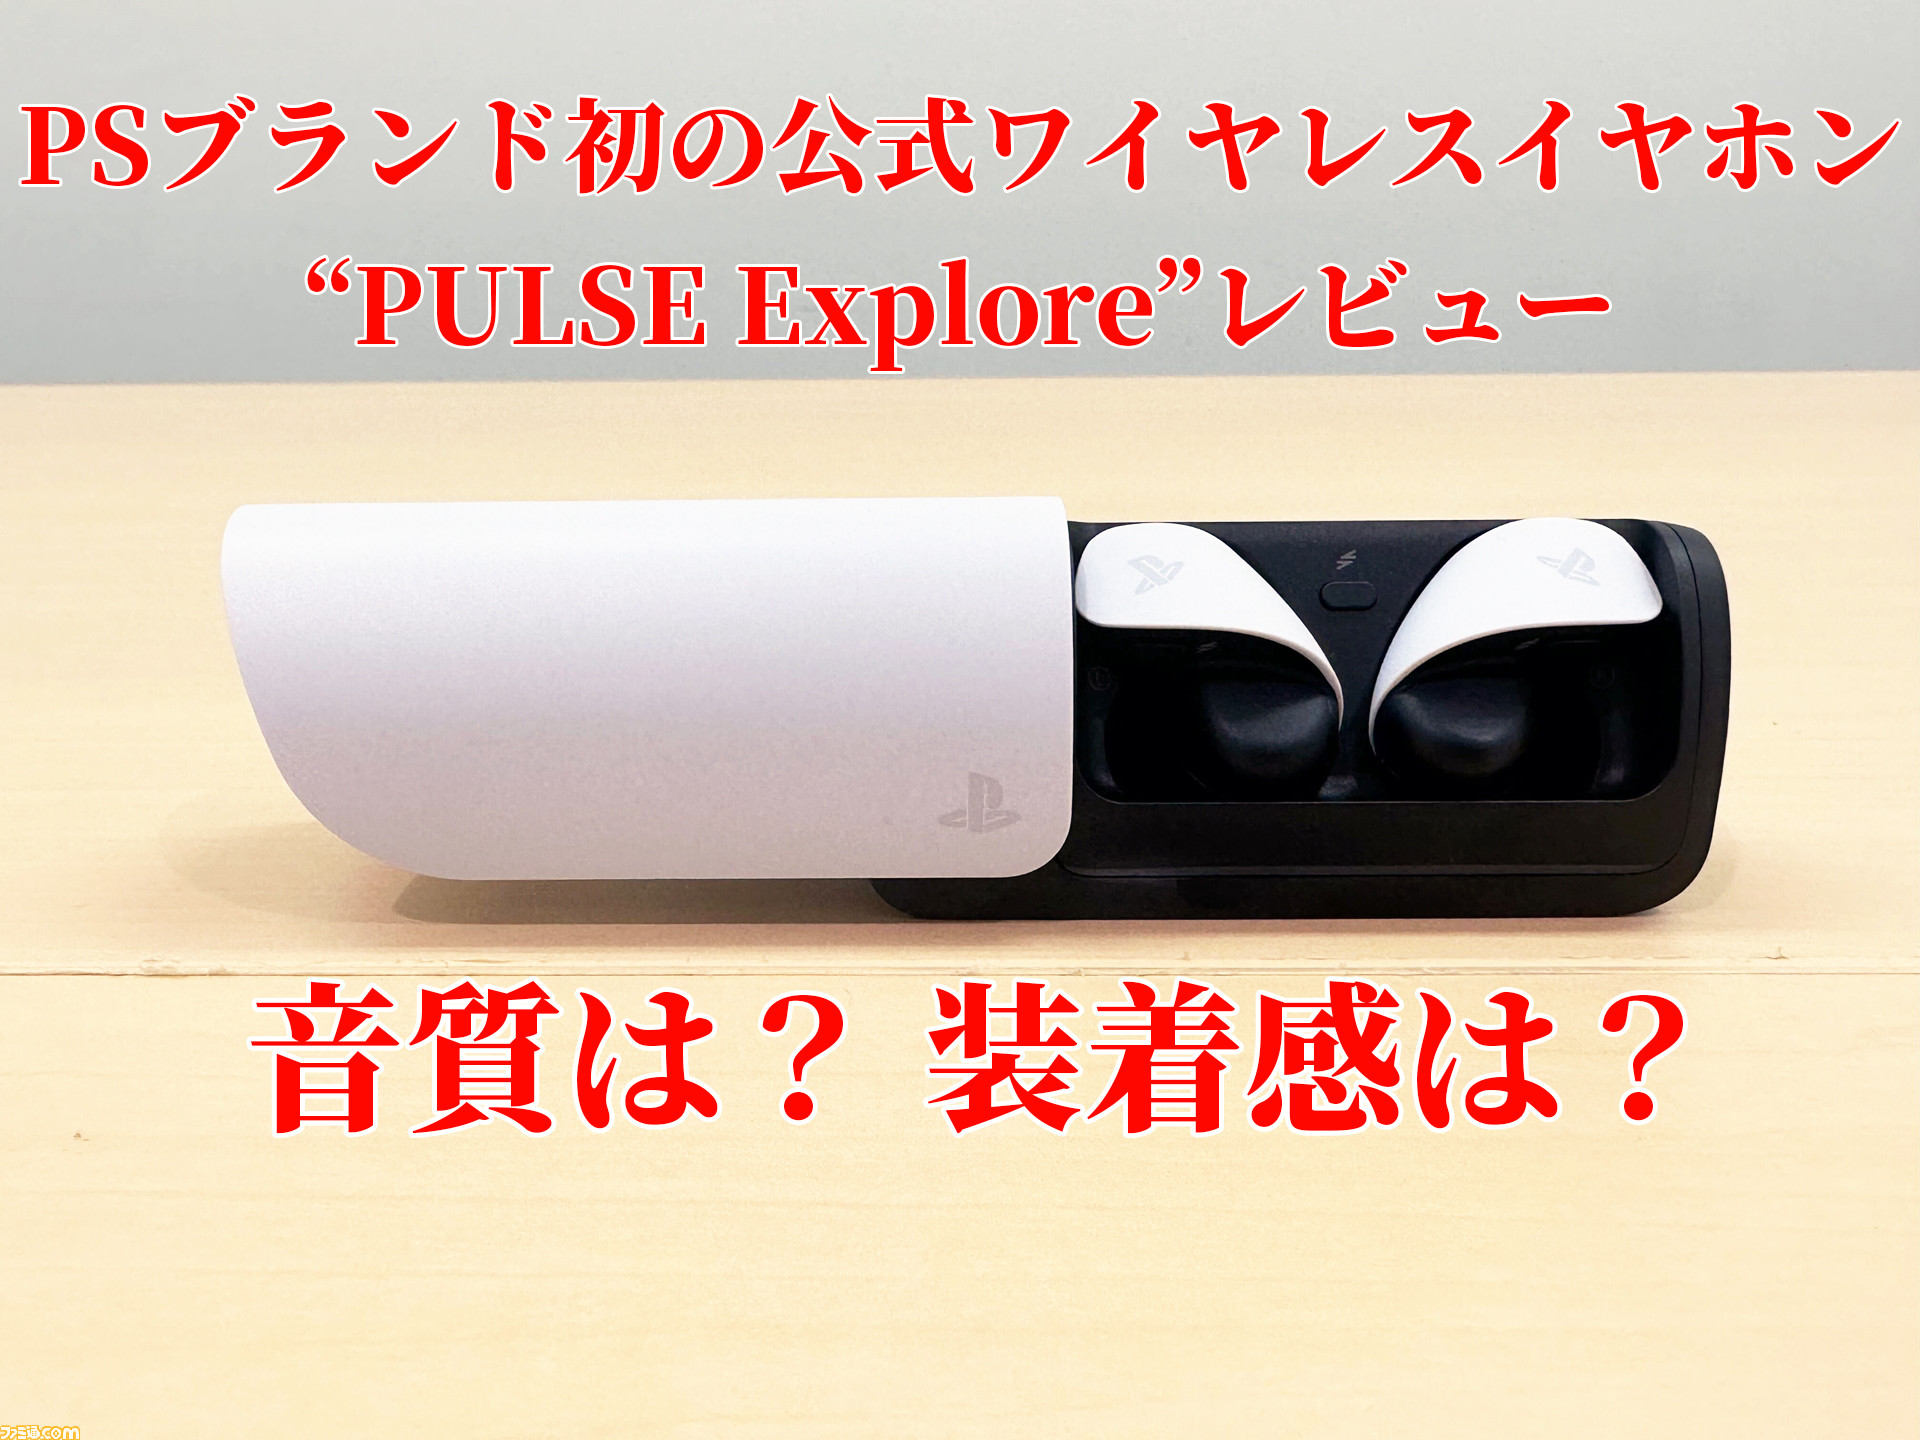 PS5PS5 PULSE Explore ワイヤレスイヤホン(CFI-ZWE1J) - www